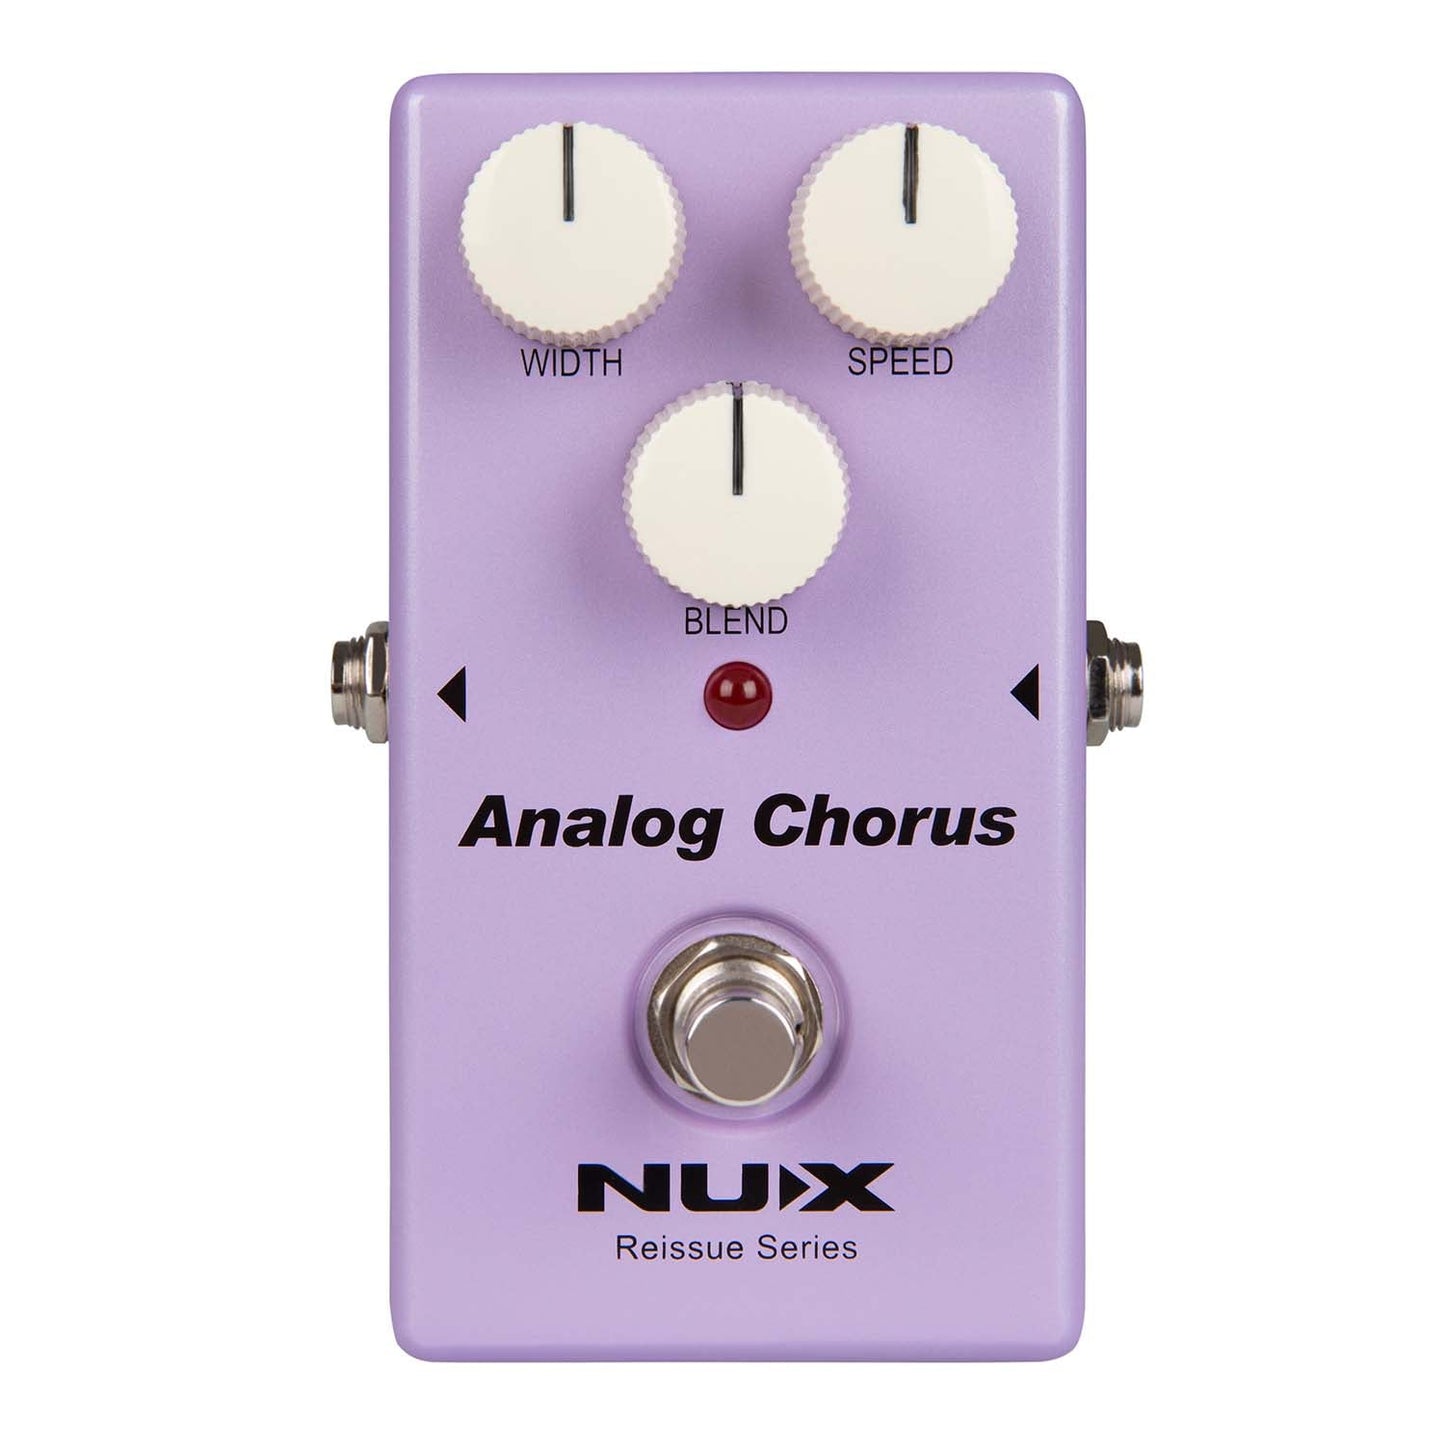 NUX Analog Chorus Reissue Series Effect pedal